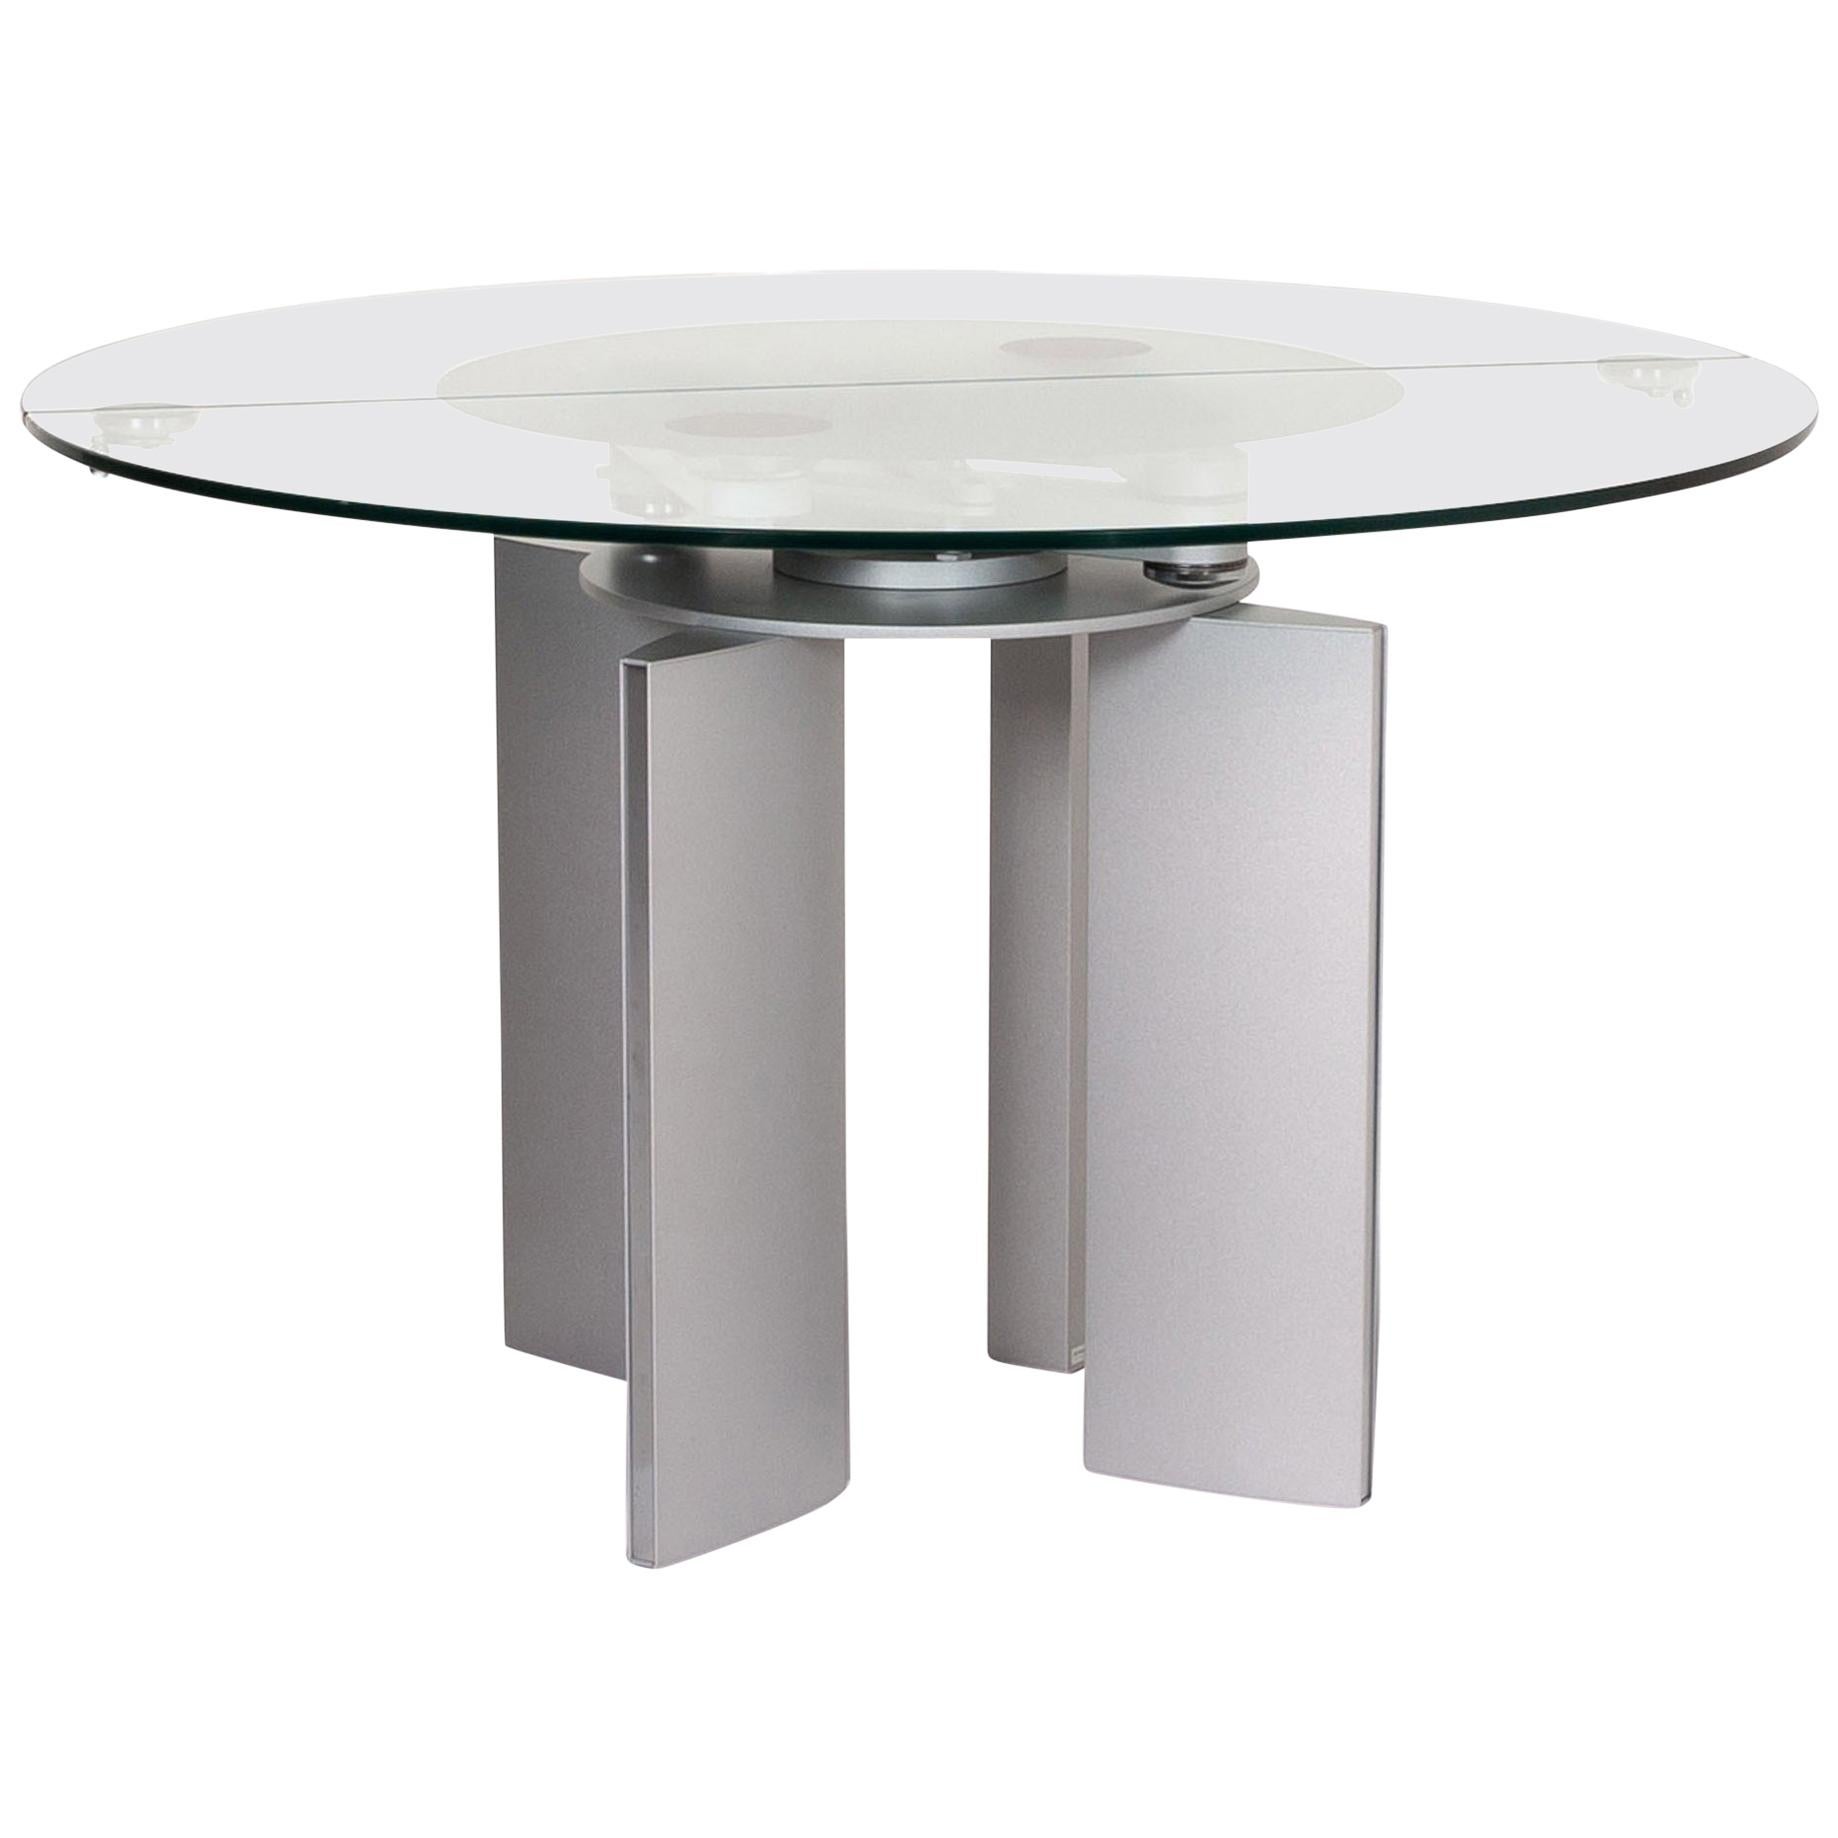 Ronald Schmitt K / G 750 / E Glass Dining Table Metal Table For Sale